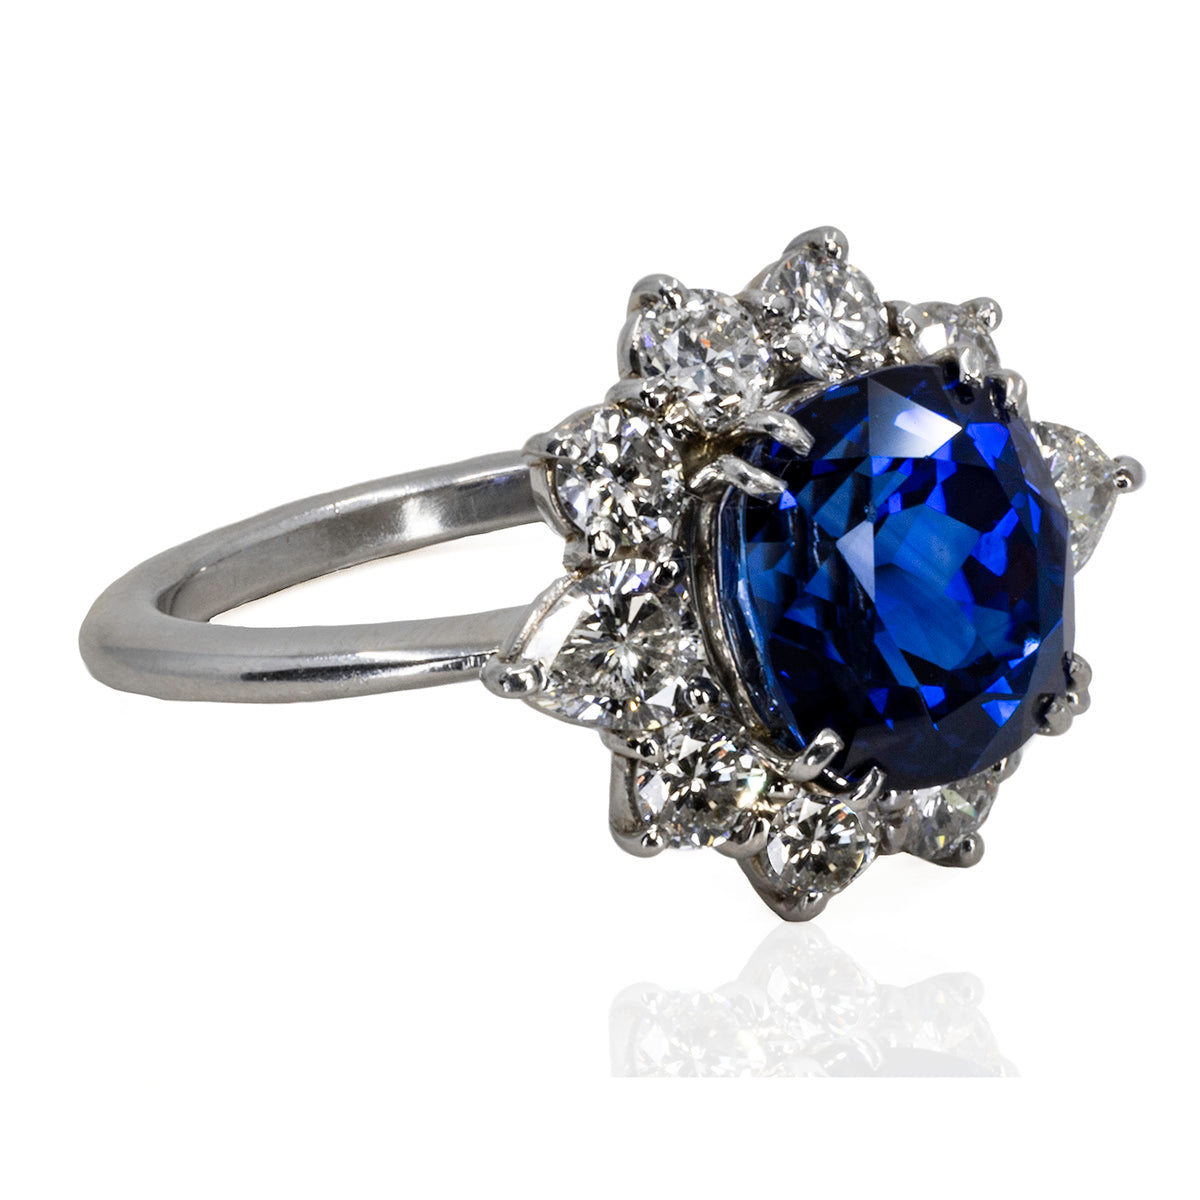 Vivid Royal Blue Sapphire Ring